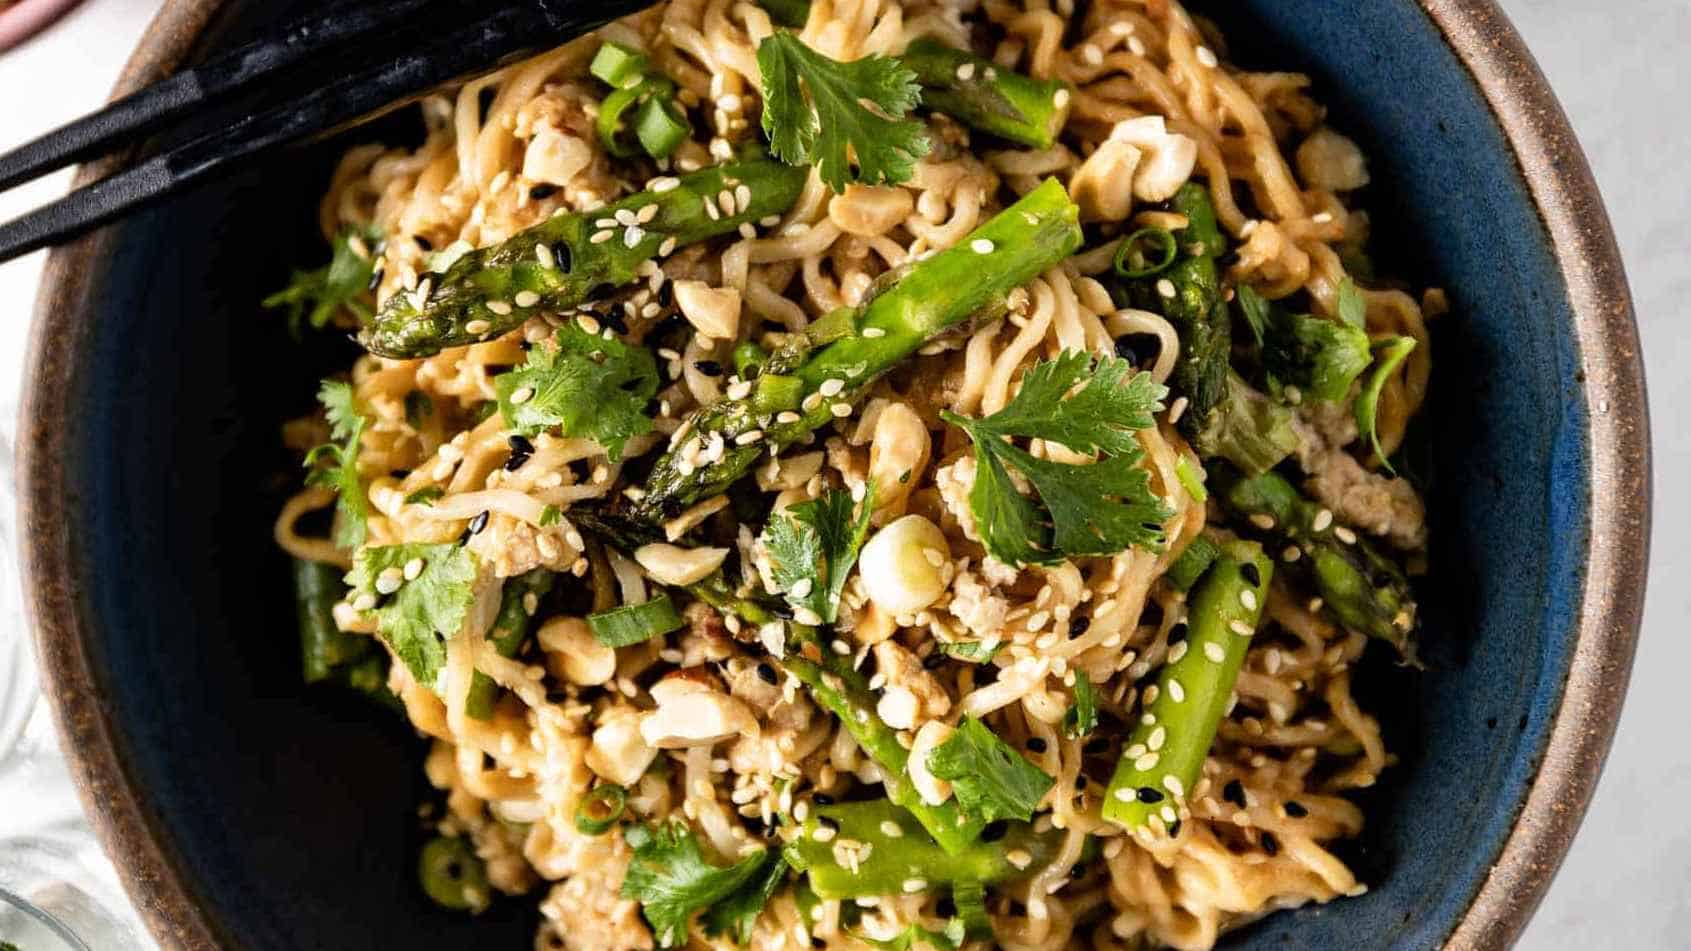 A bowl of stir-fried noodles garnished with green vegetables, sesame seeds, and fresh coriander.